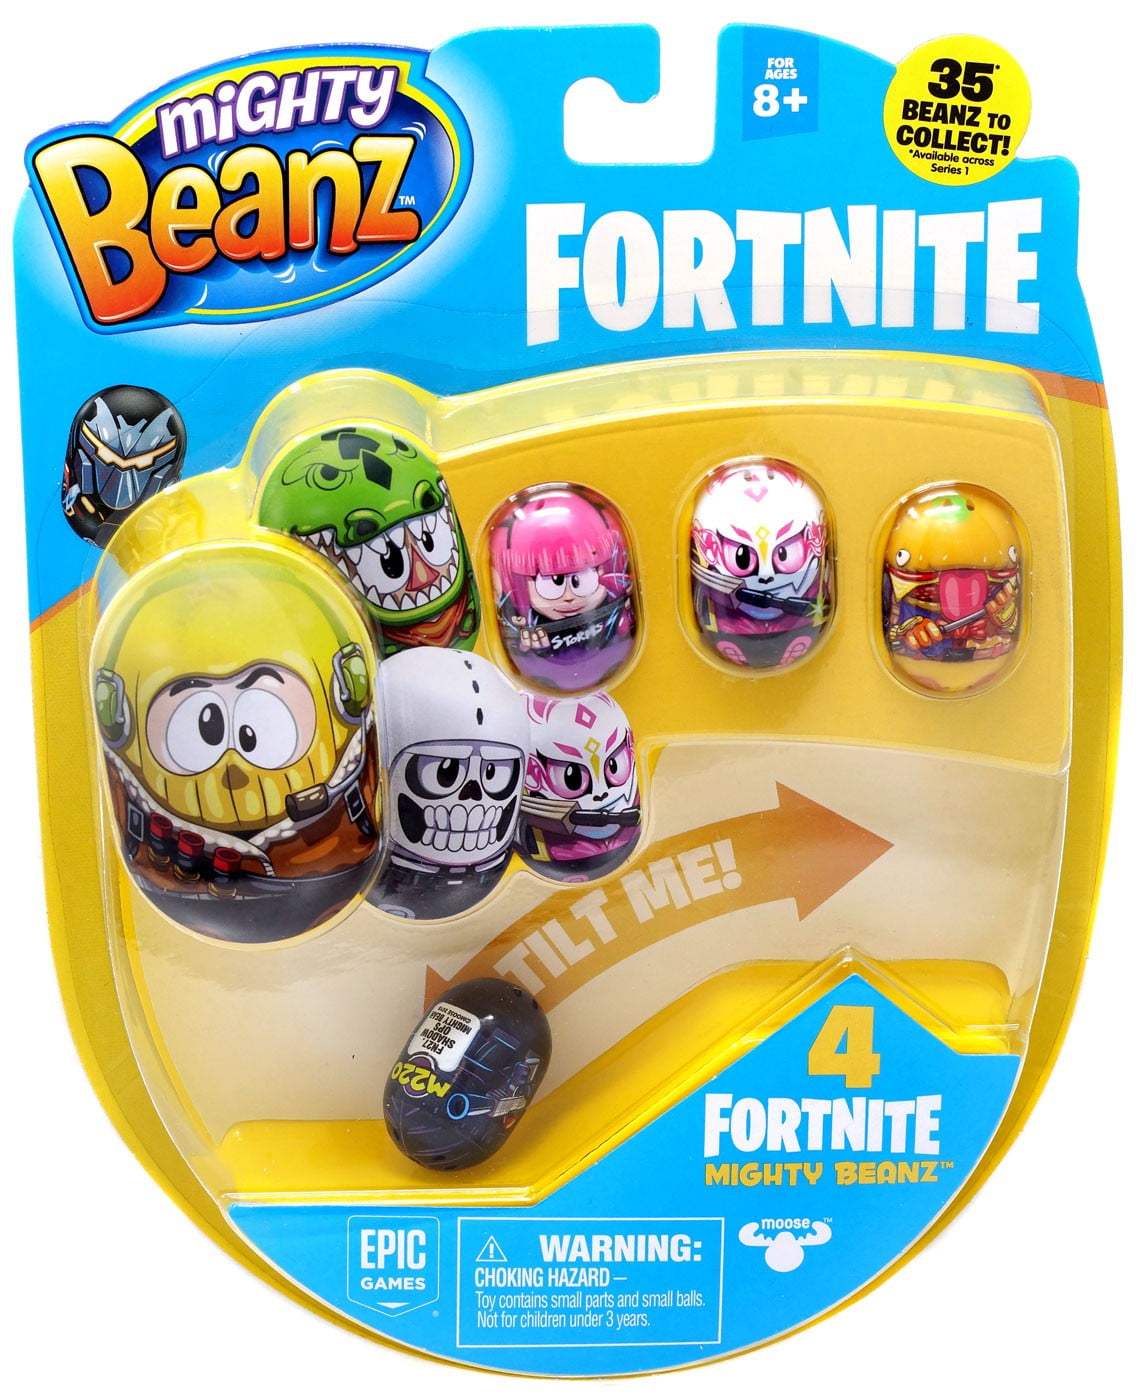 Mighty Beanz Fortnite Shadow Ops 4-Pack - Walmart.com - 1139 x 1400 jpeg 349kB